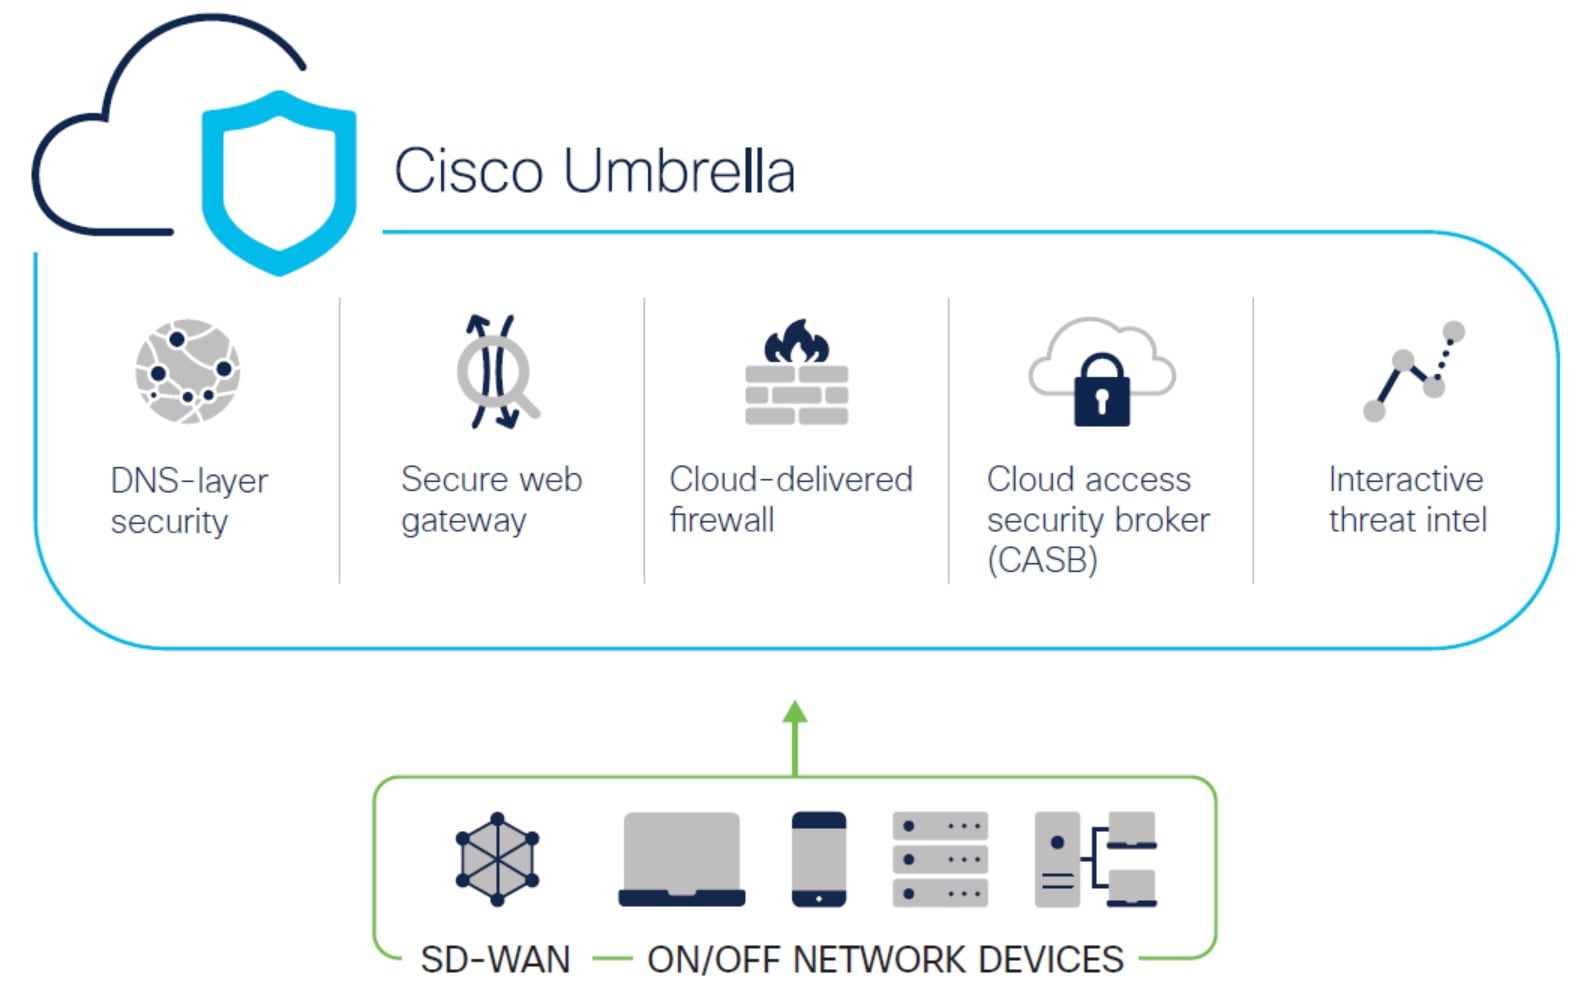 The image depicts Cisco Umbrella.